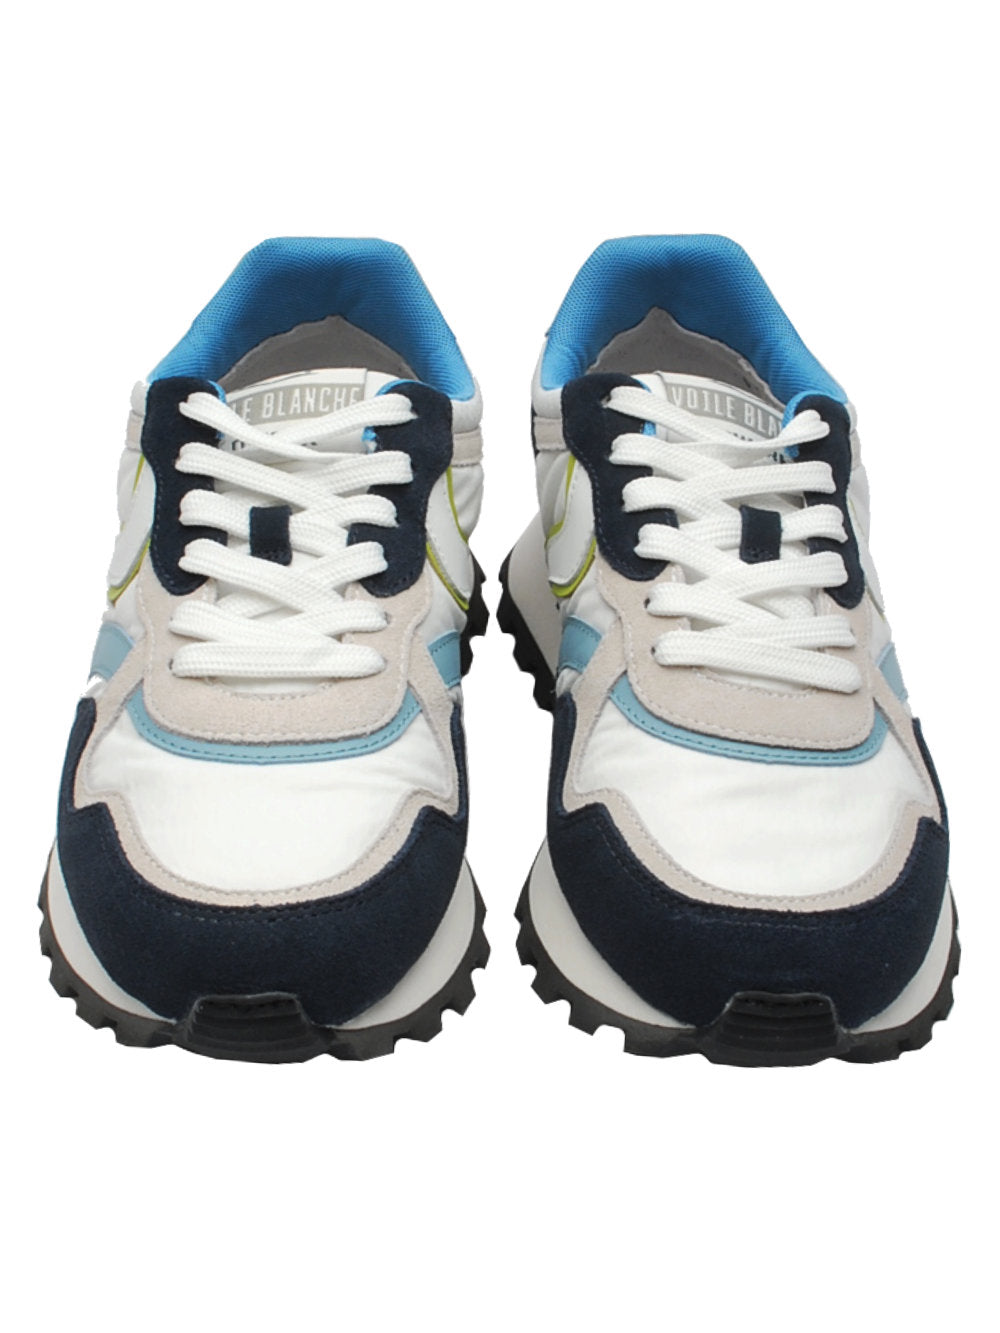 Voile Blanche sneaker qwark 8314 bianco blu pe24